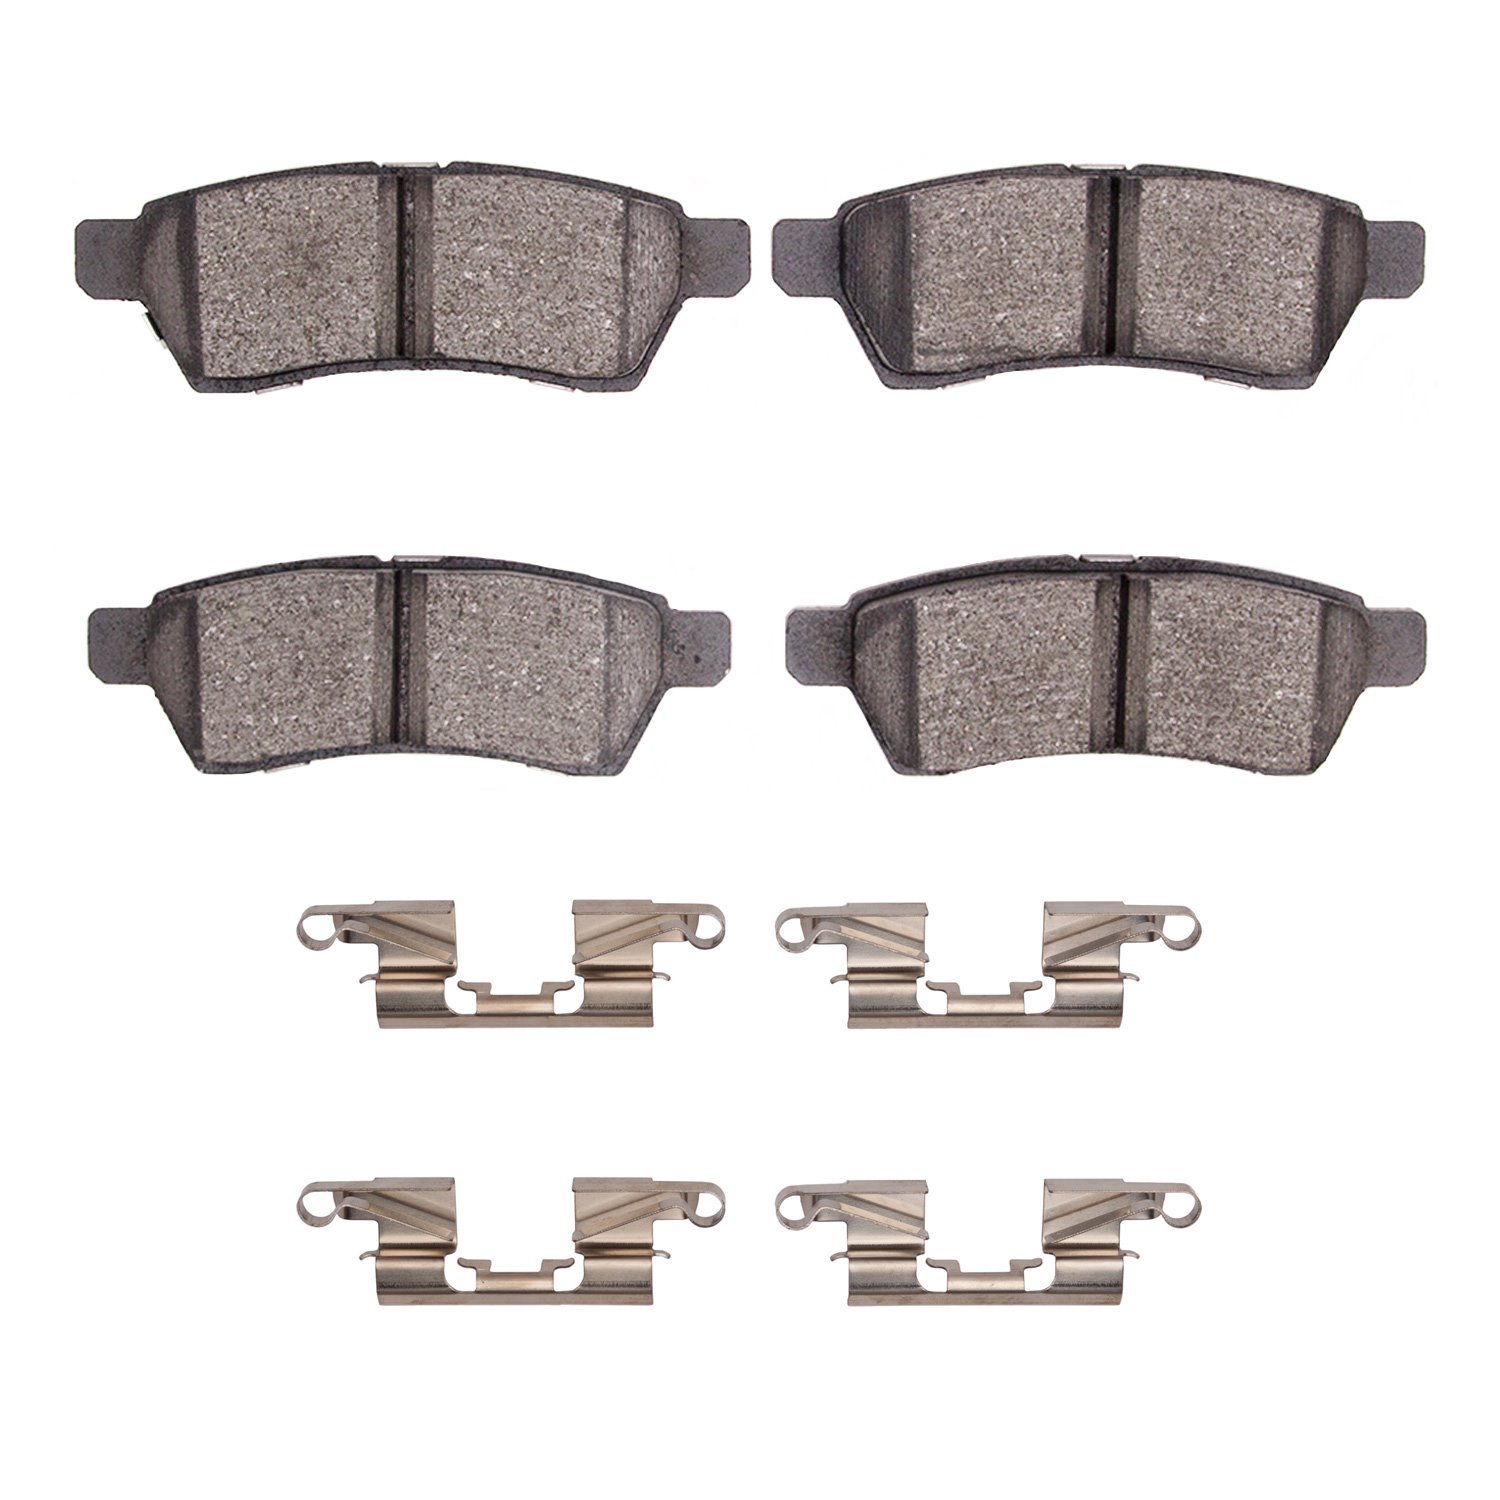 1310-1100-01 3000-Series Ceramic Brake Pads & Hardware Kit, Fits Select Multiple Makes/Models, Position: Rear